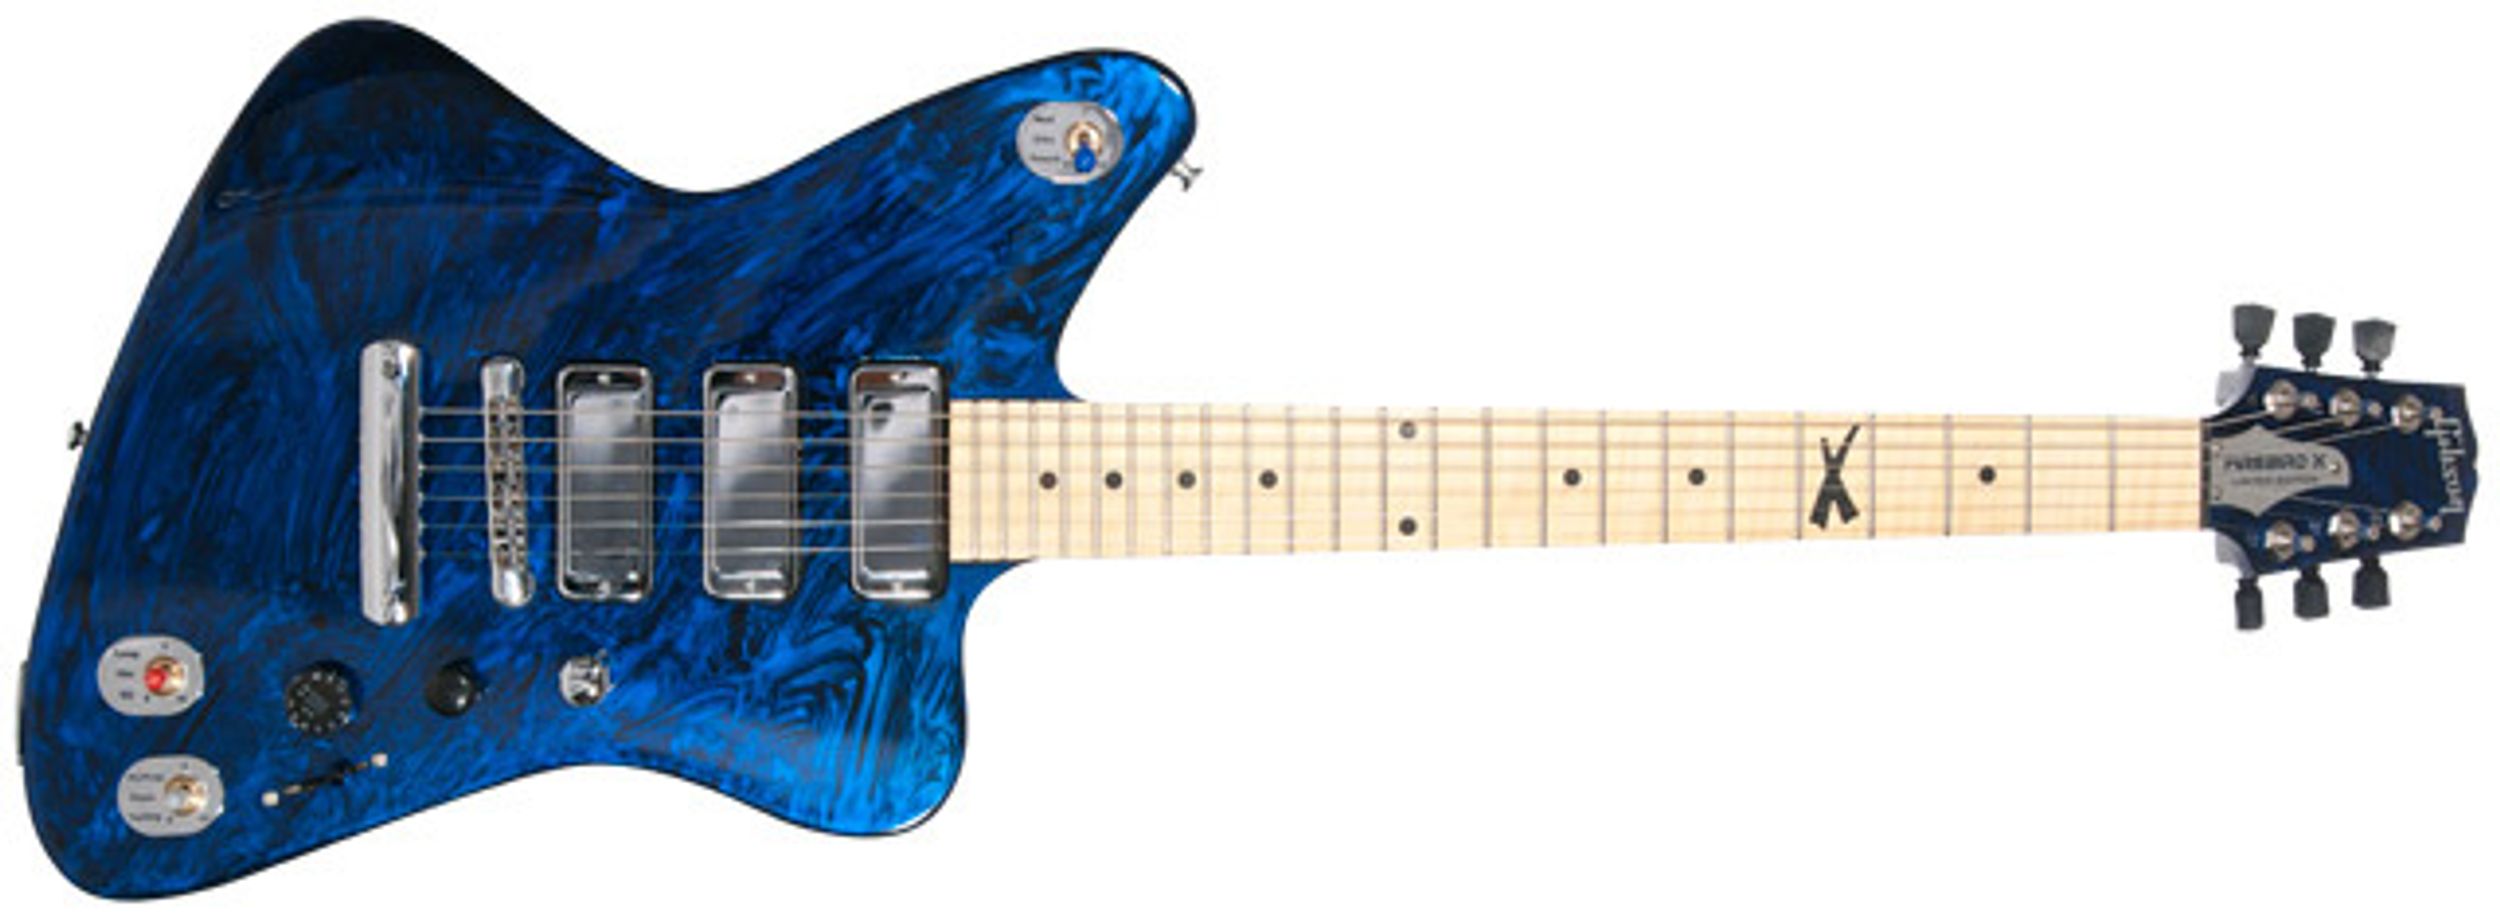 Gibson Firebird X Electric Guitar Review